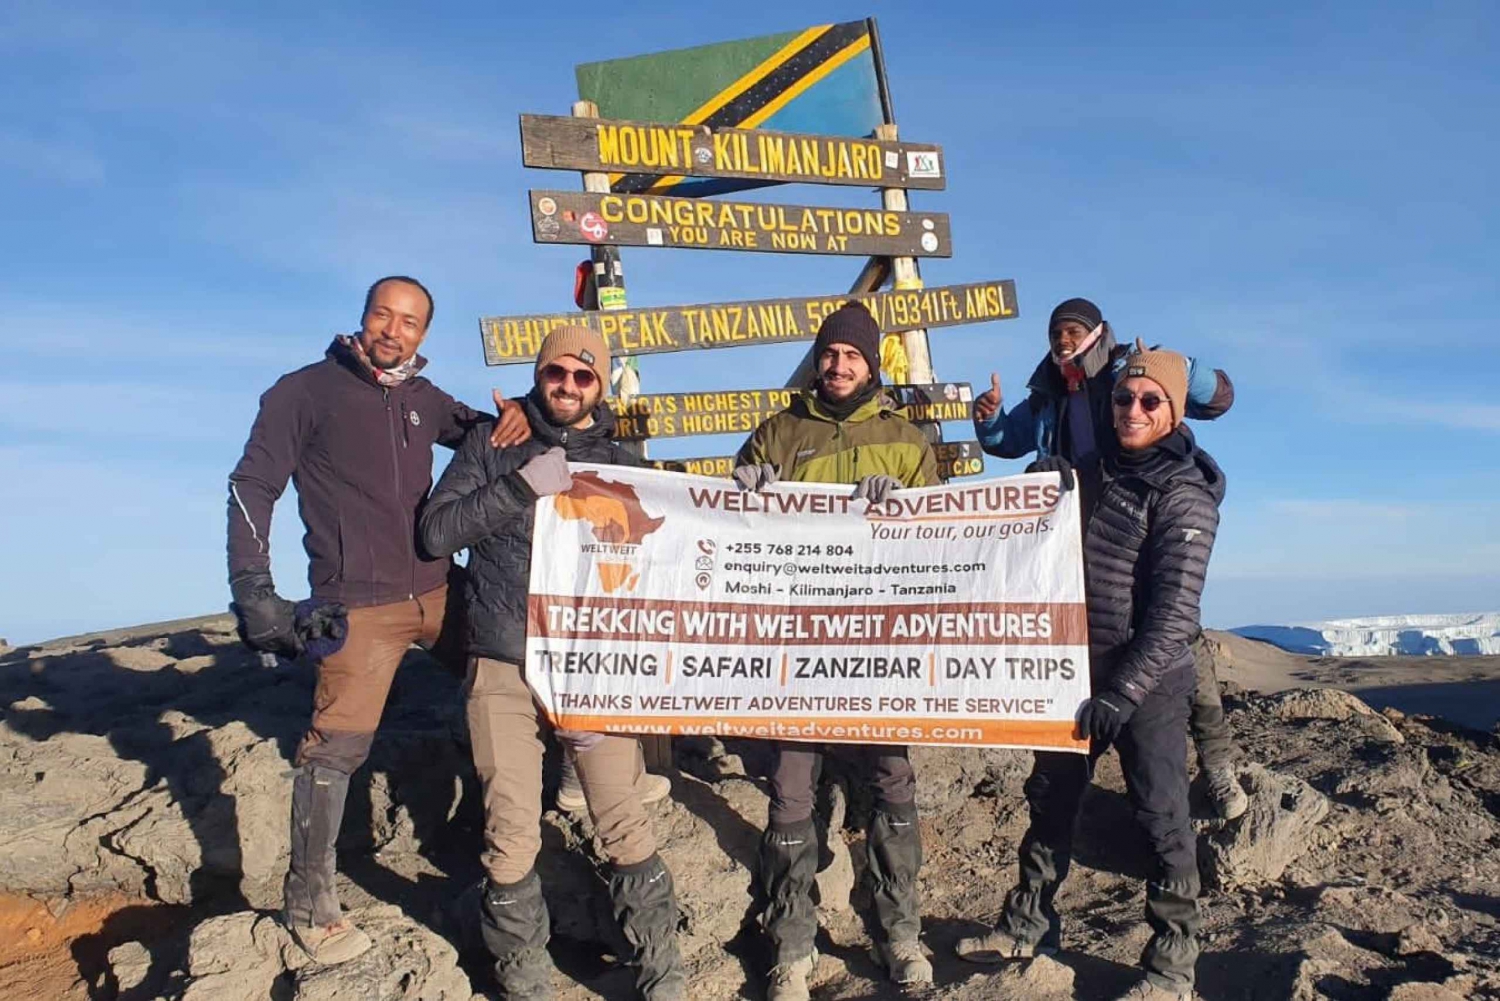 Kilimanjaro-fjellet 6 dager og 5 netters fottur via Marangu-ruten